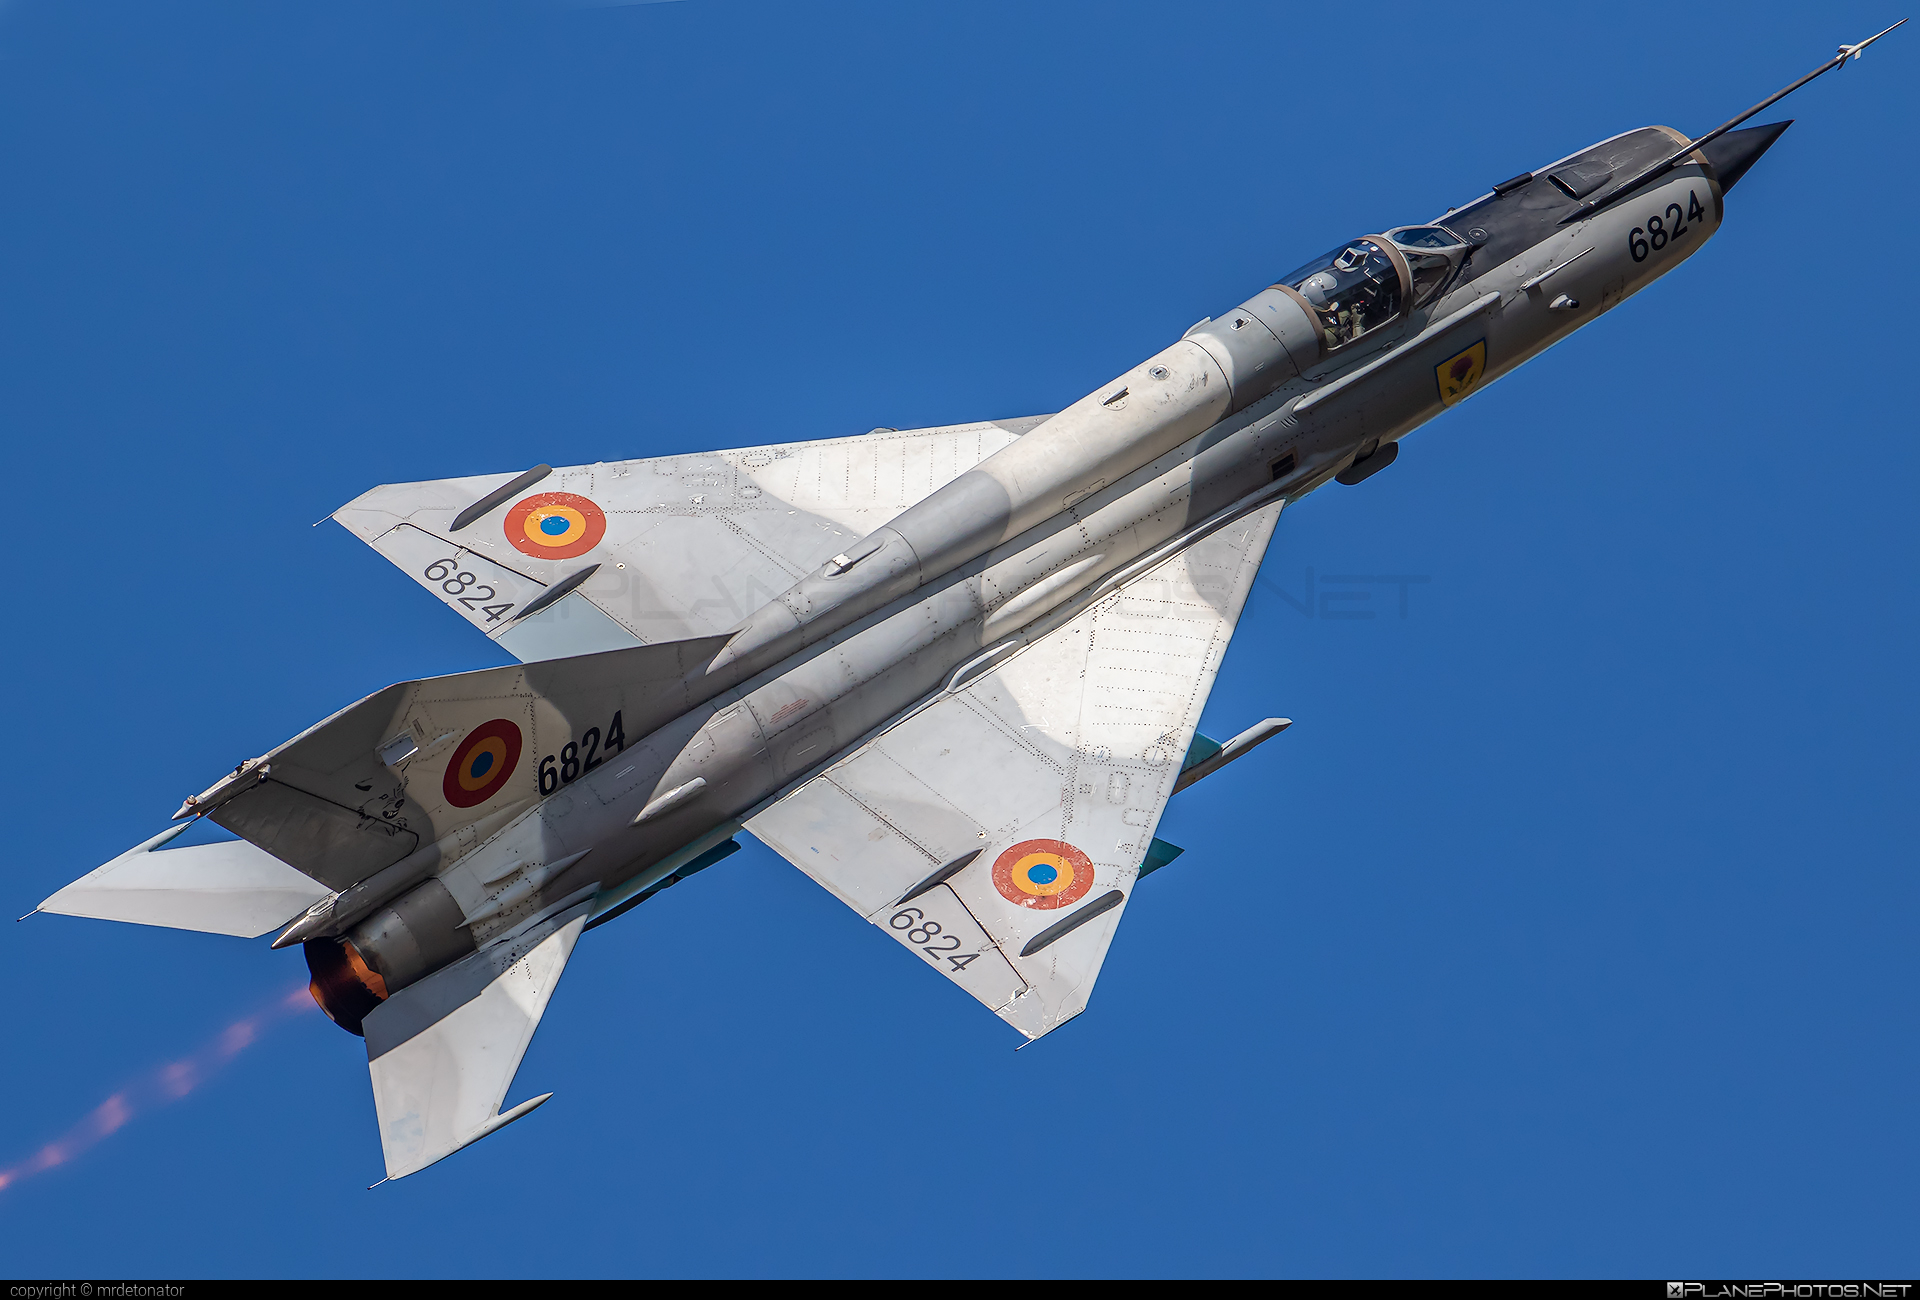 Mikoyan-Gurevich MiG-21MF - 6824 operated by Forţele Aeriene Române (Romanian Air Force) #forteleaerieneromane #mig #mig21 #mig21mf #mikoyangurevich #natodays2019 #romanianairforce